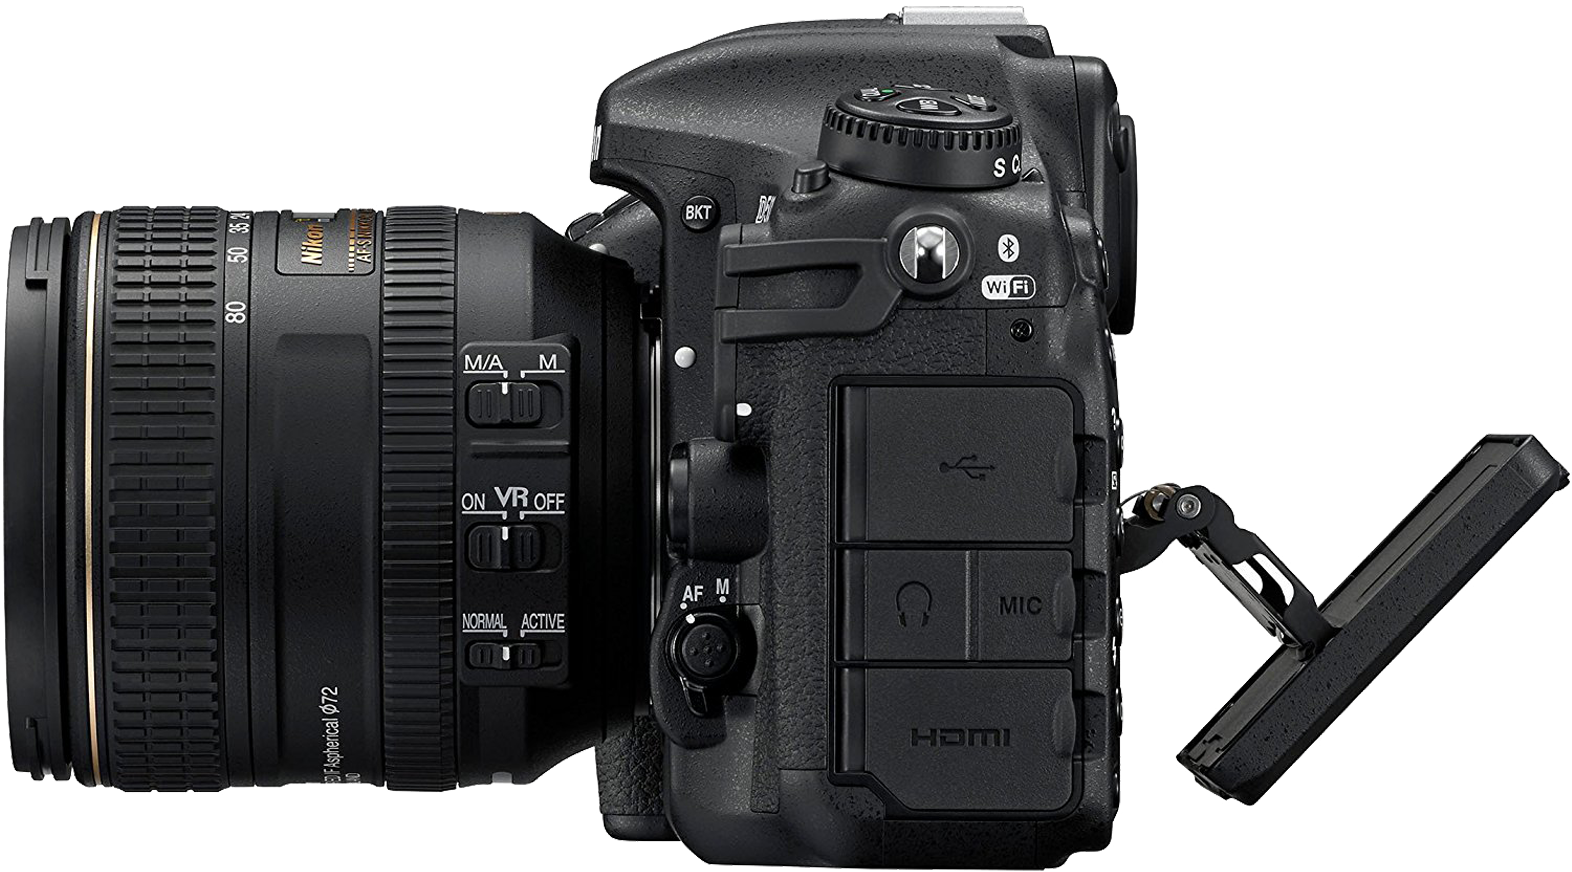 Share - Nikon D500 - Digital Camera - Slr (1600x1200)